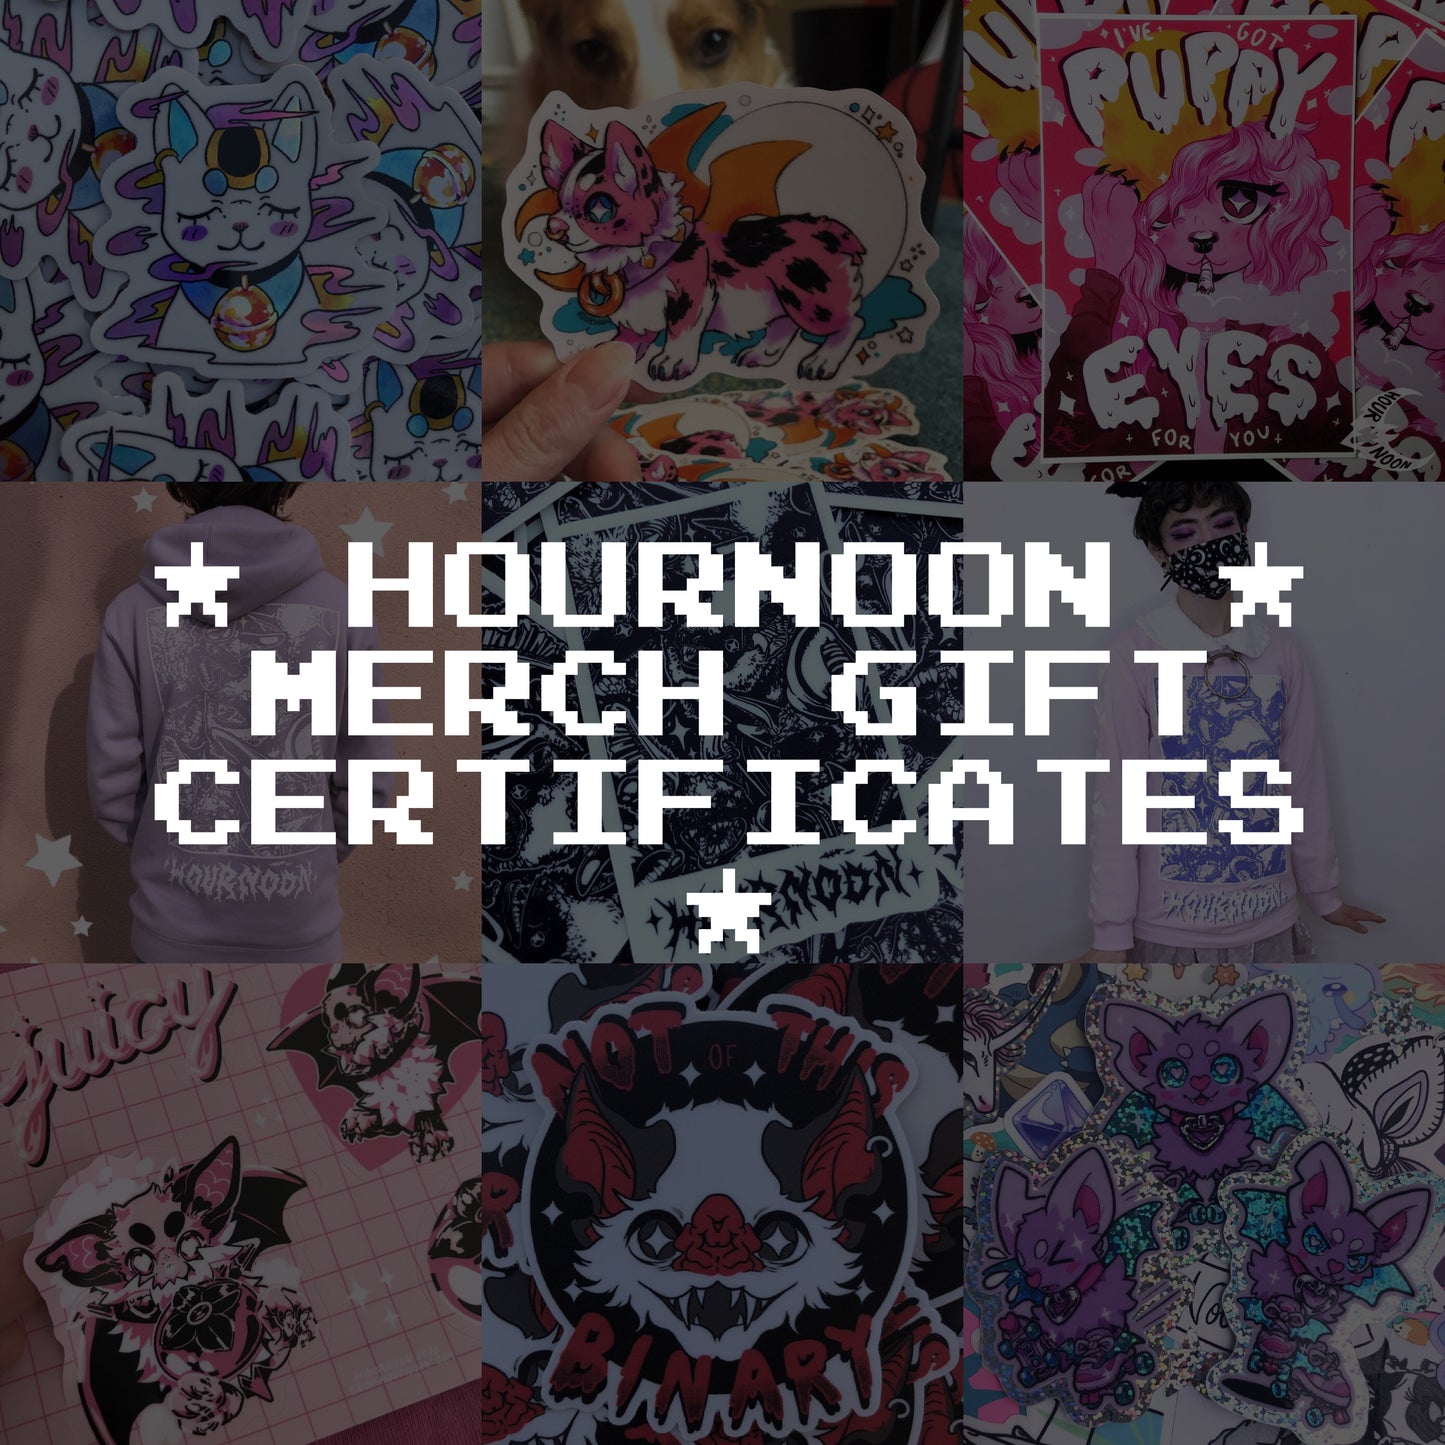 hournoon merch ♡ gift certificate